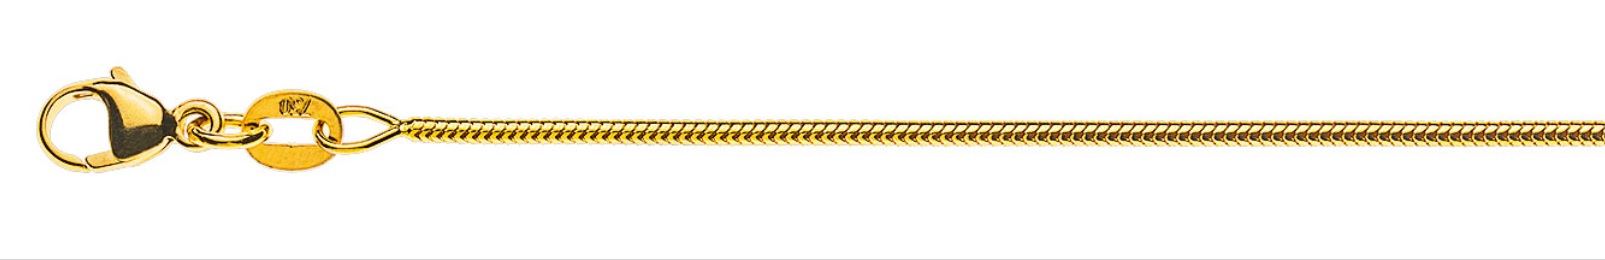 AURONOS Prestige Necklace yellow gold 18K snake chain 40cm 1.2mm